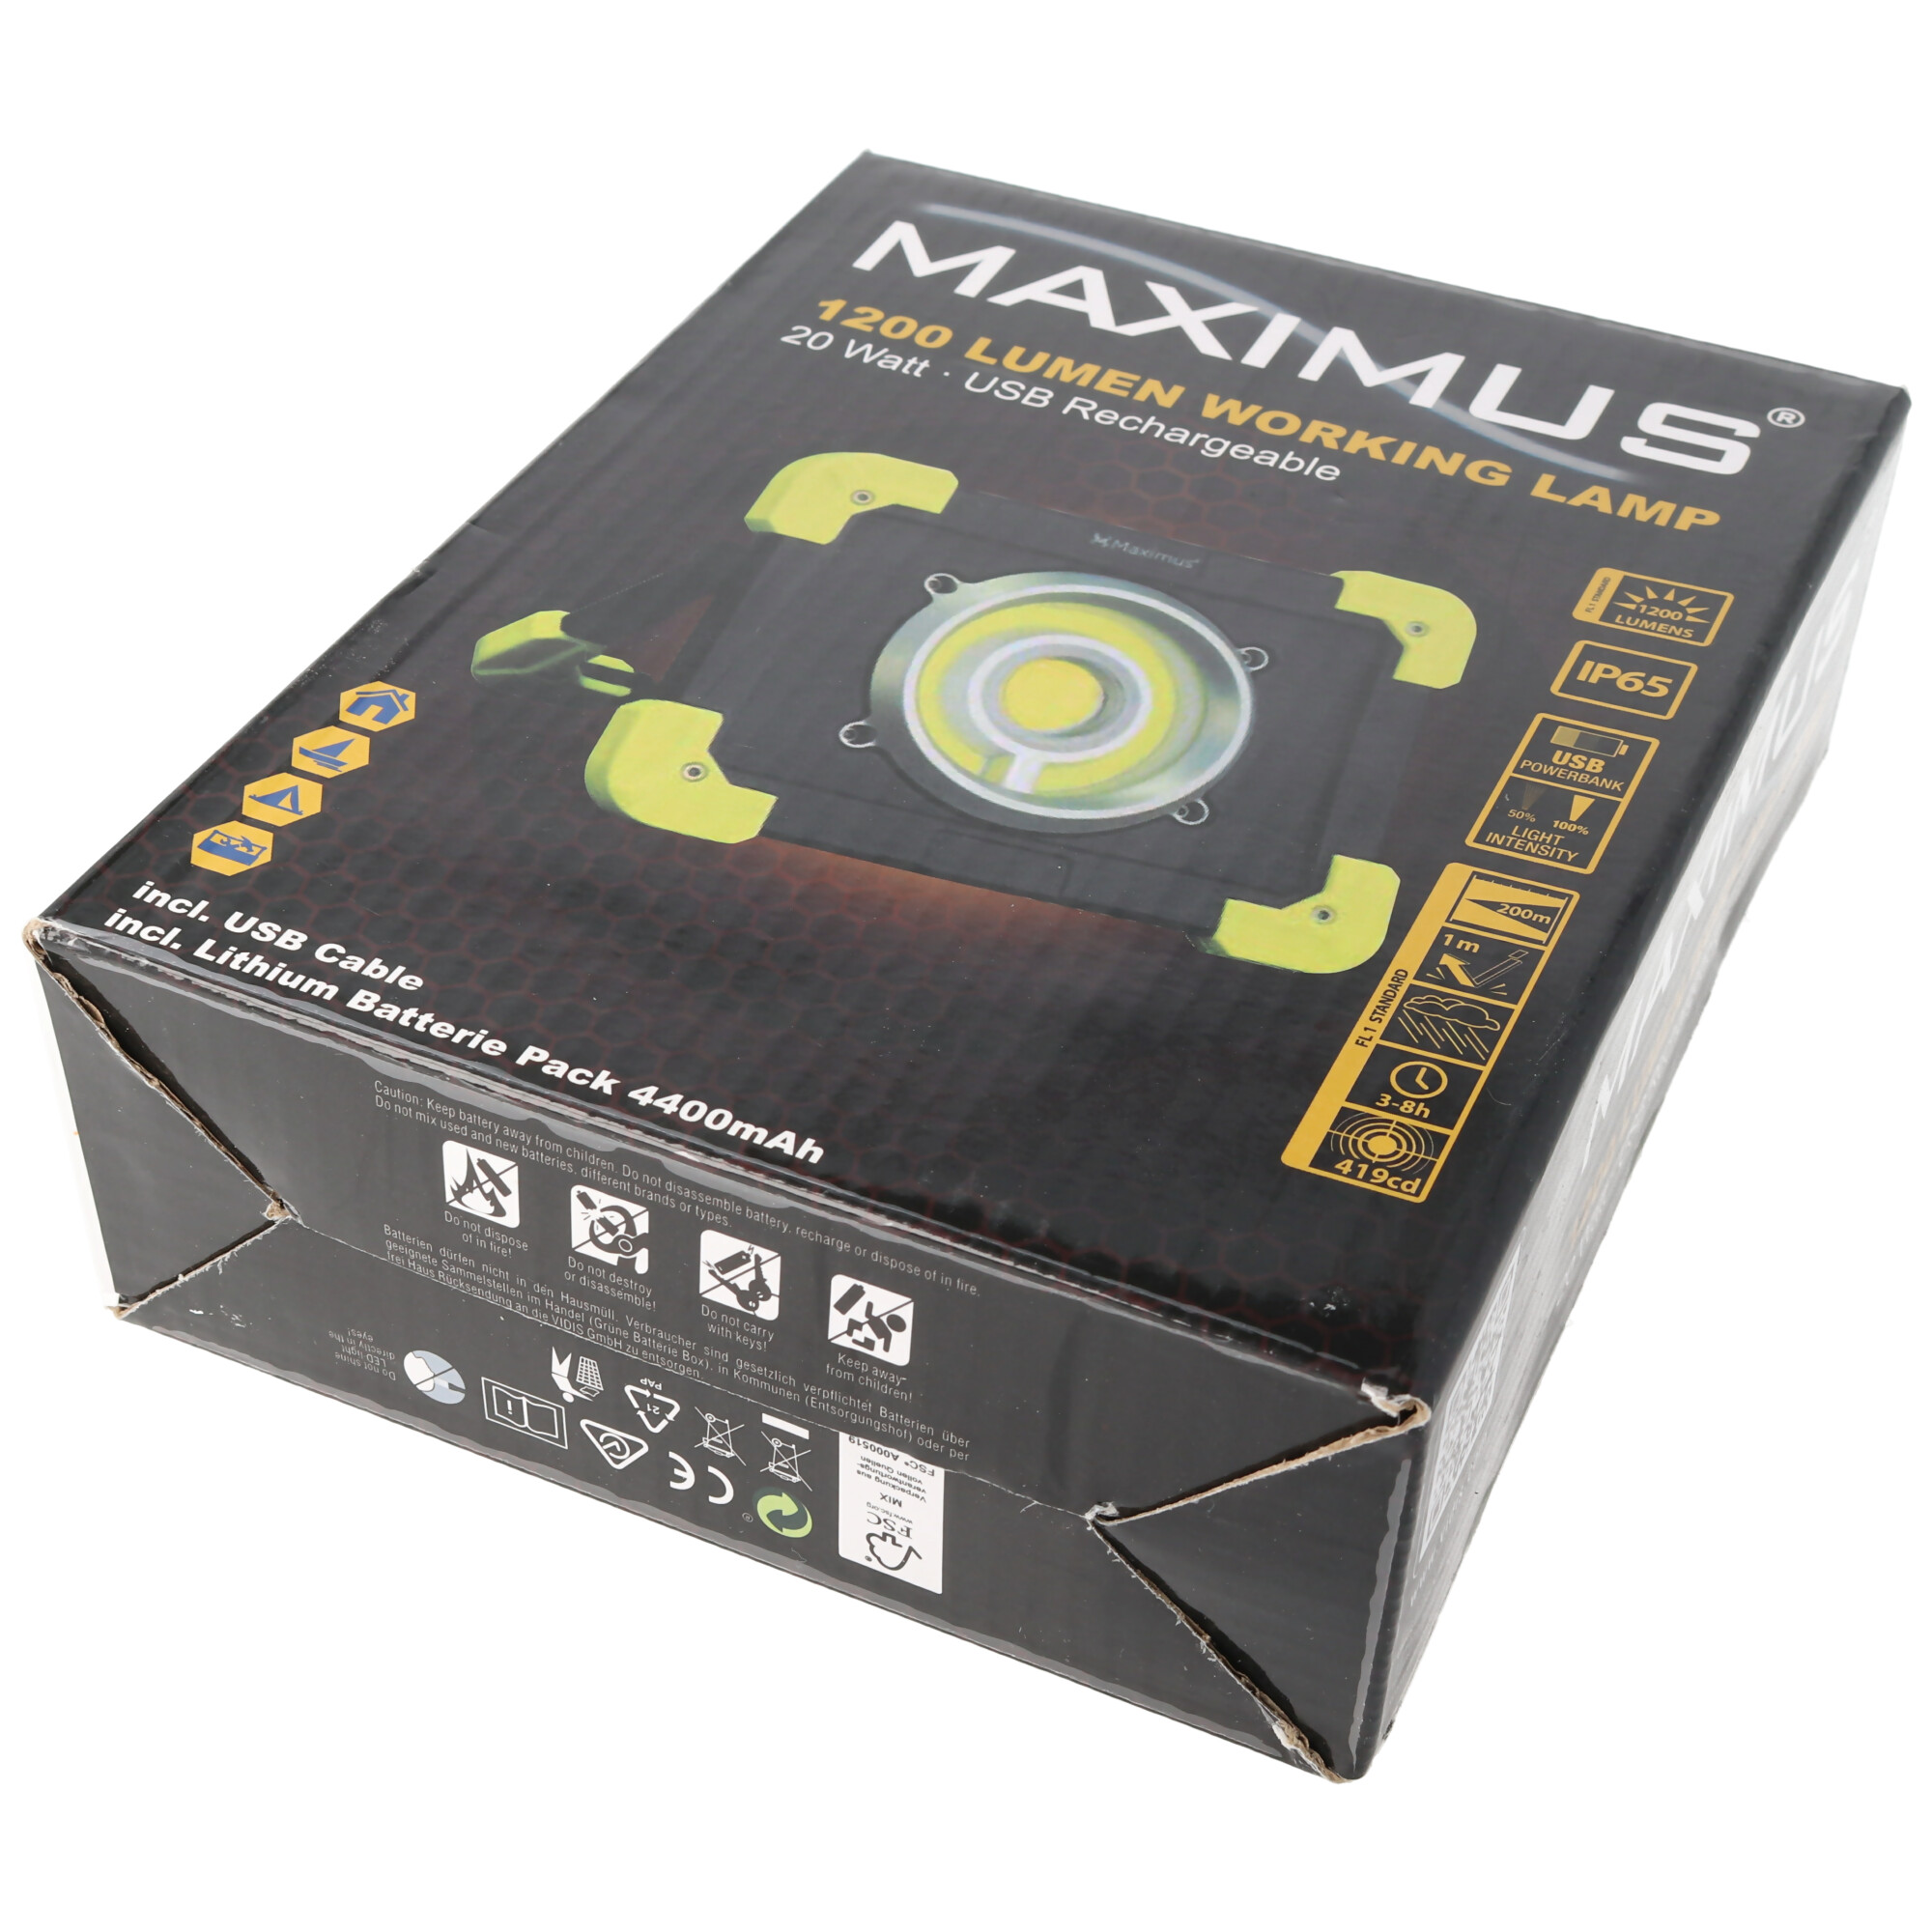 LED Baustrahler 20W max. 350lm im Kunststoffgehäuse schwarz, gelb inklusive 4400mAh Li-Ion Akku und USB-Ladekabel